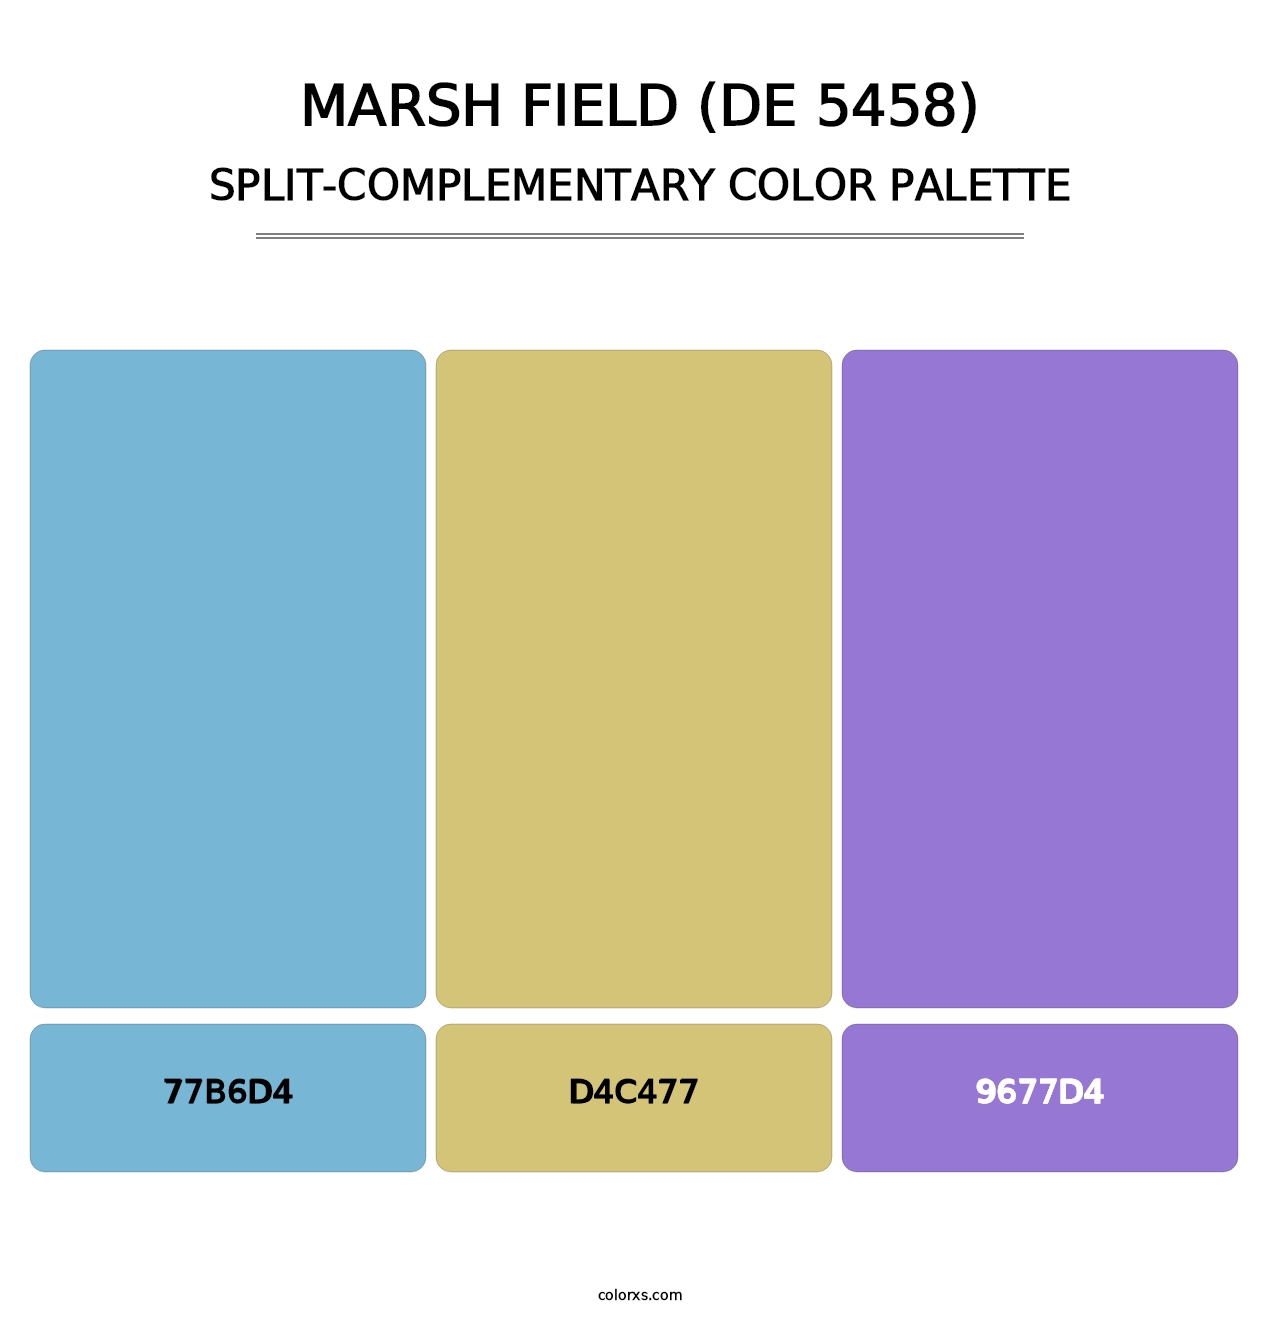 Marsh Field (DE 5458) - Split-Complementary Color Palette